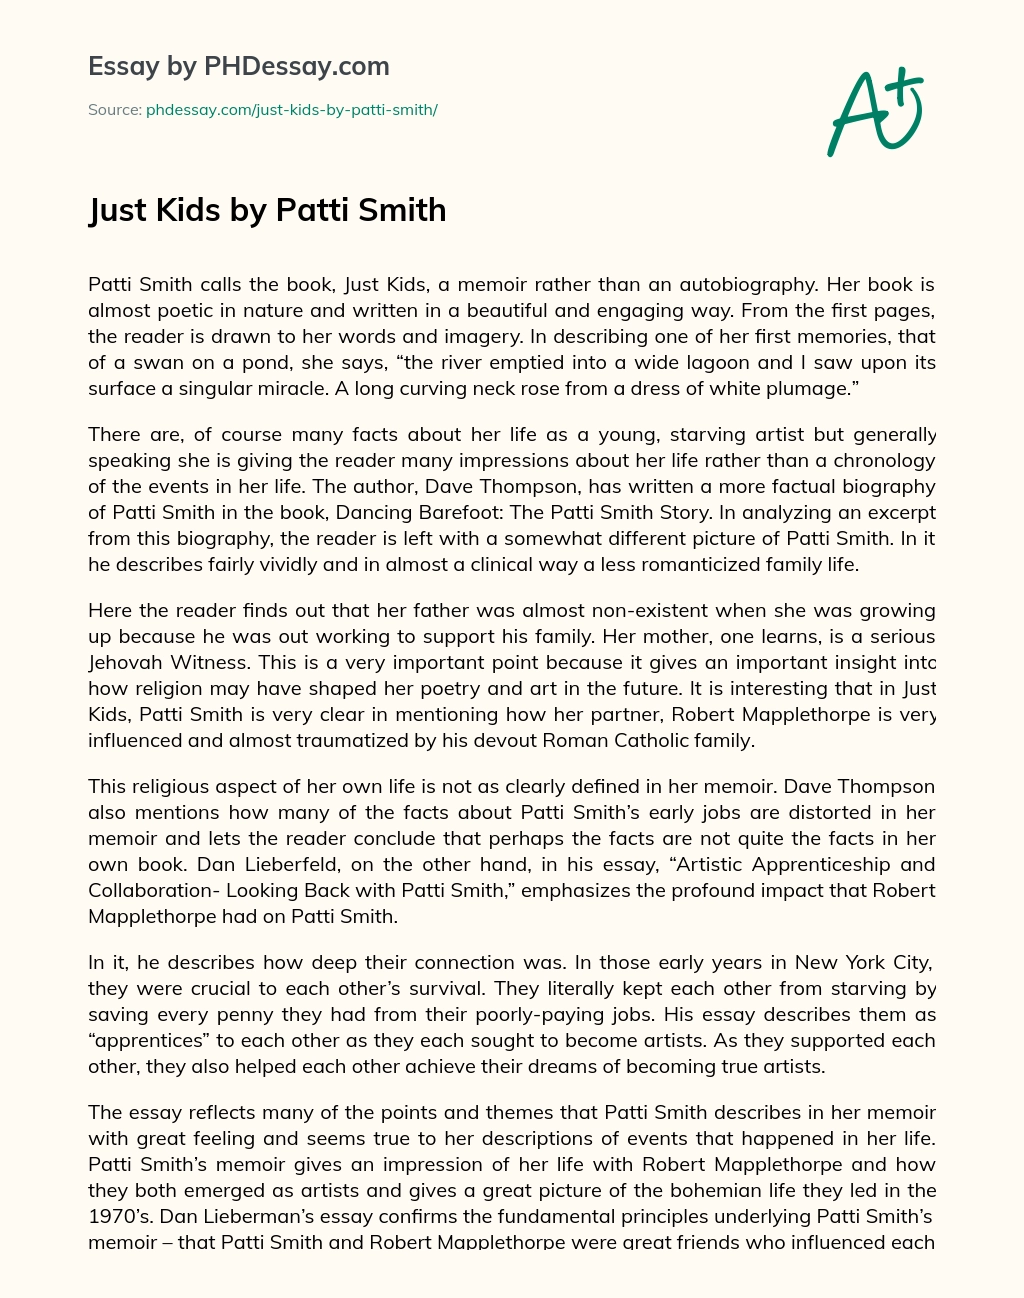 Just Kids by Patti Smith essay